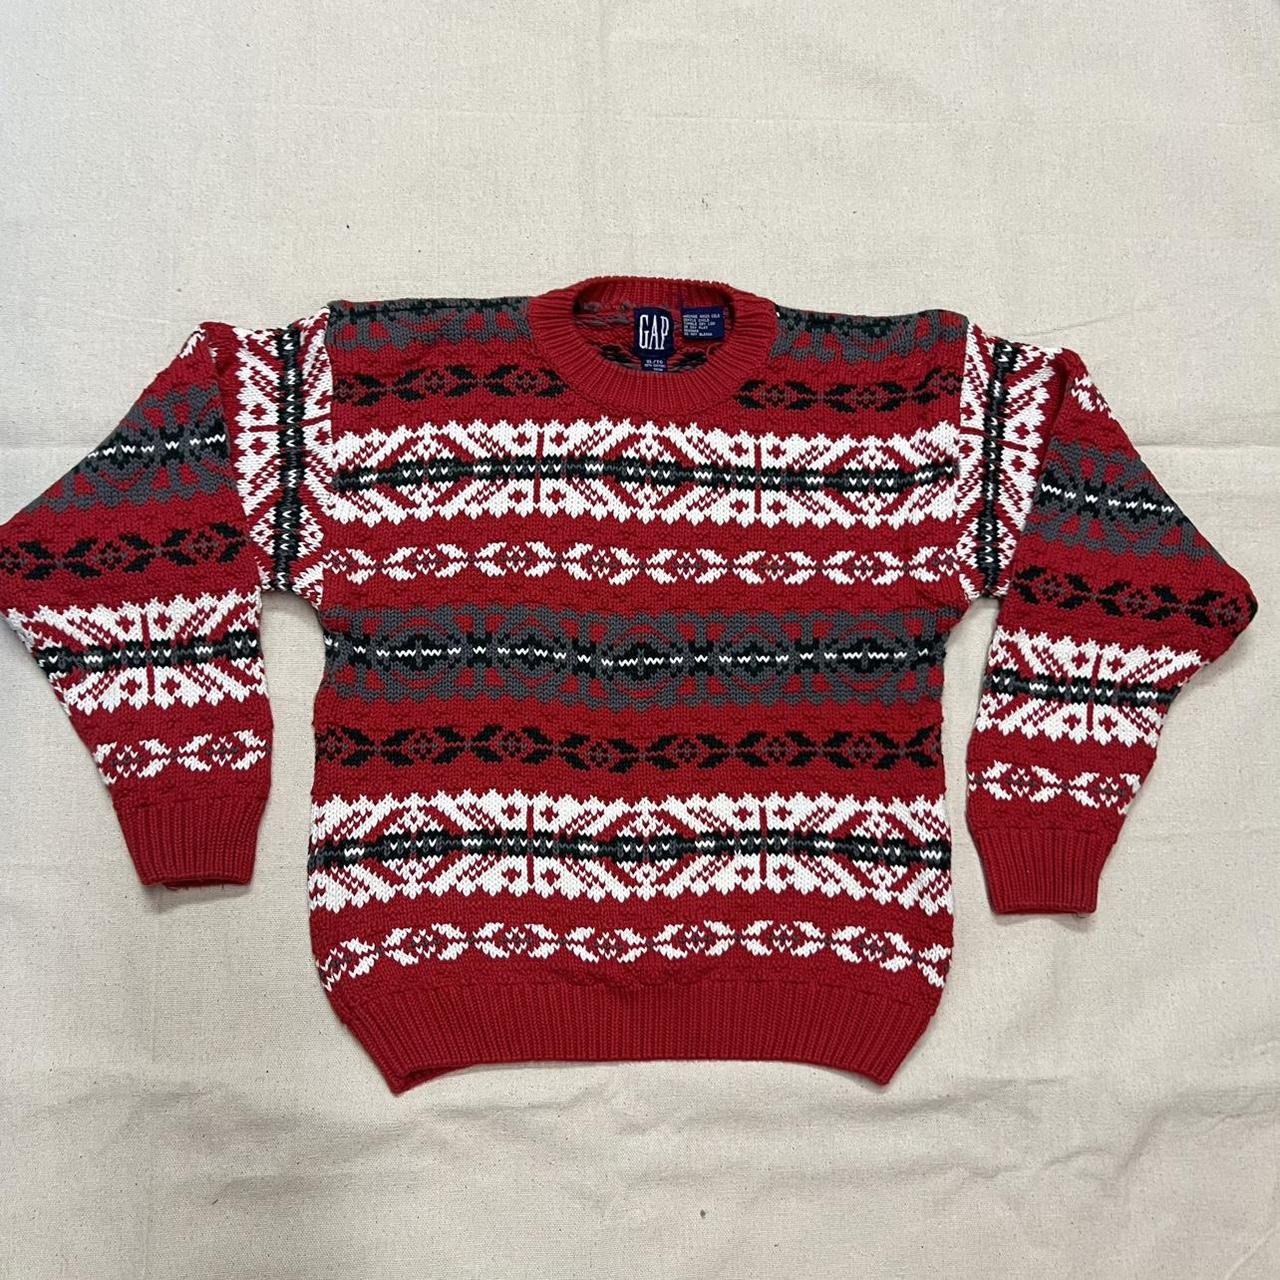 Vintage 90s Gap Cotton Knit Sweater | Holiday... - Depop